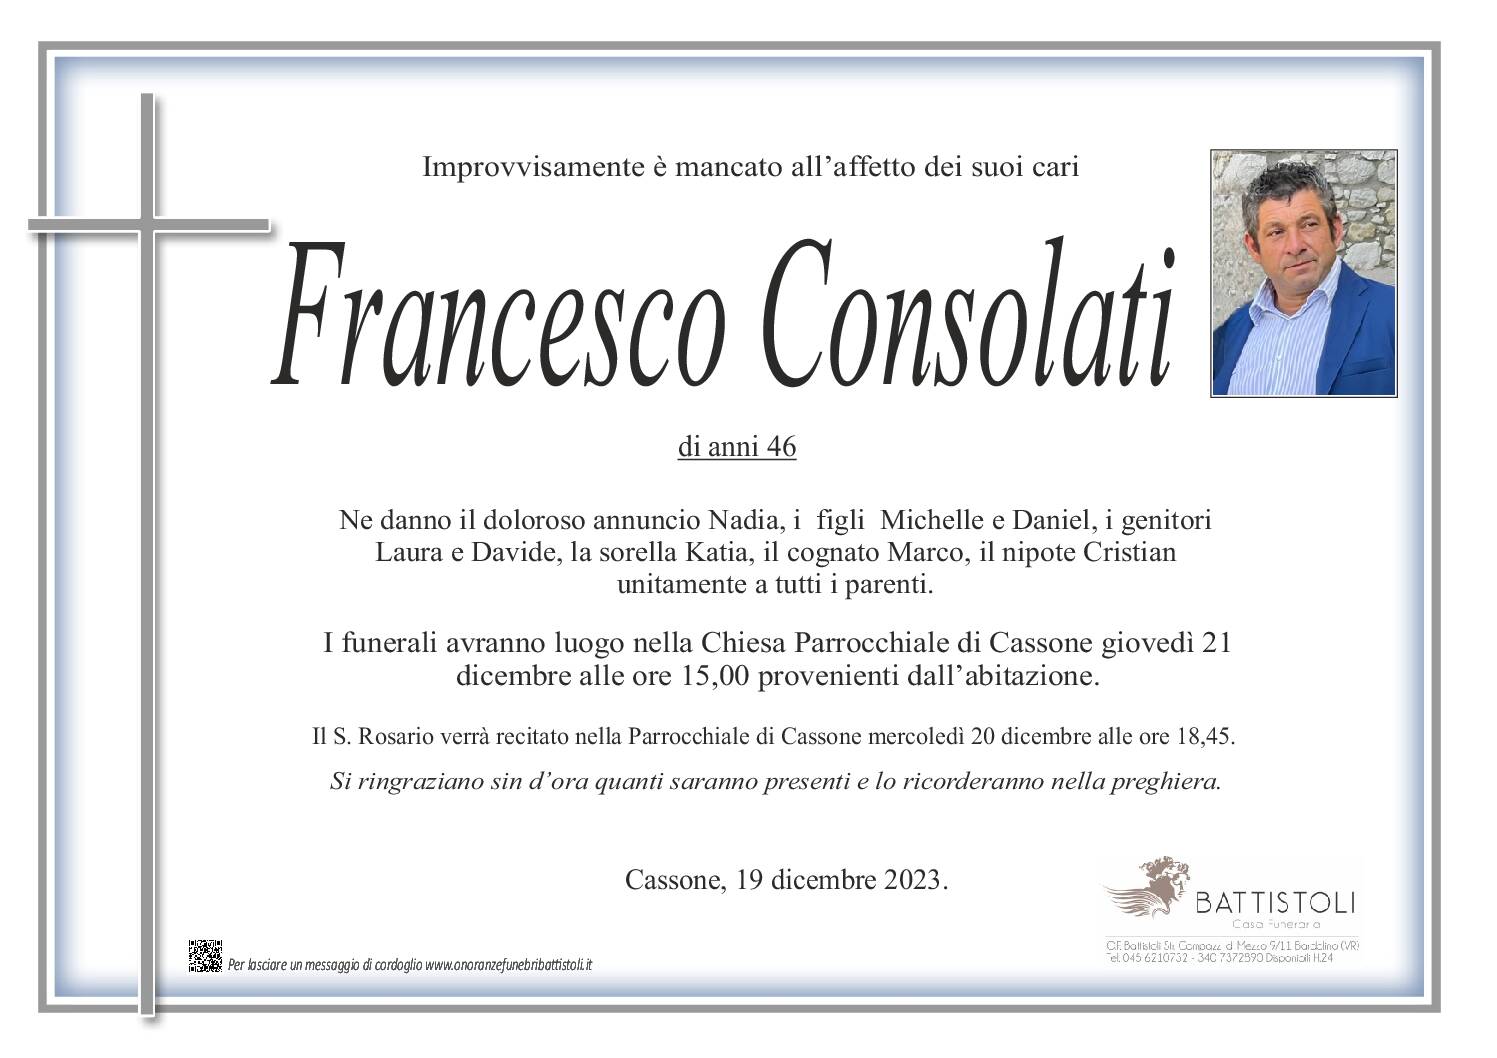 Consolati Francesco